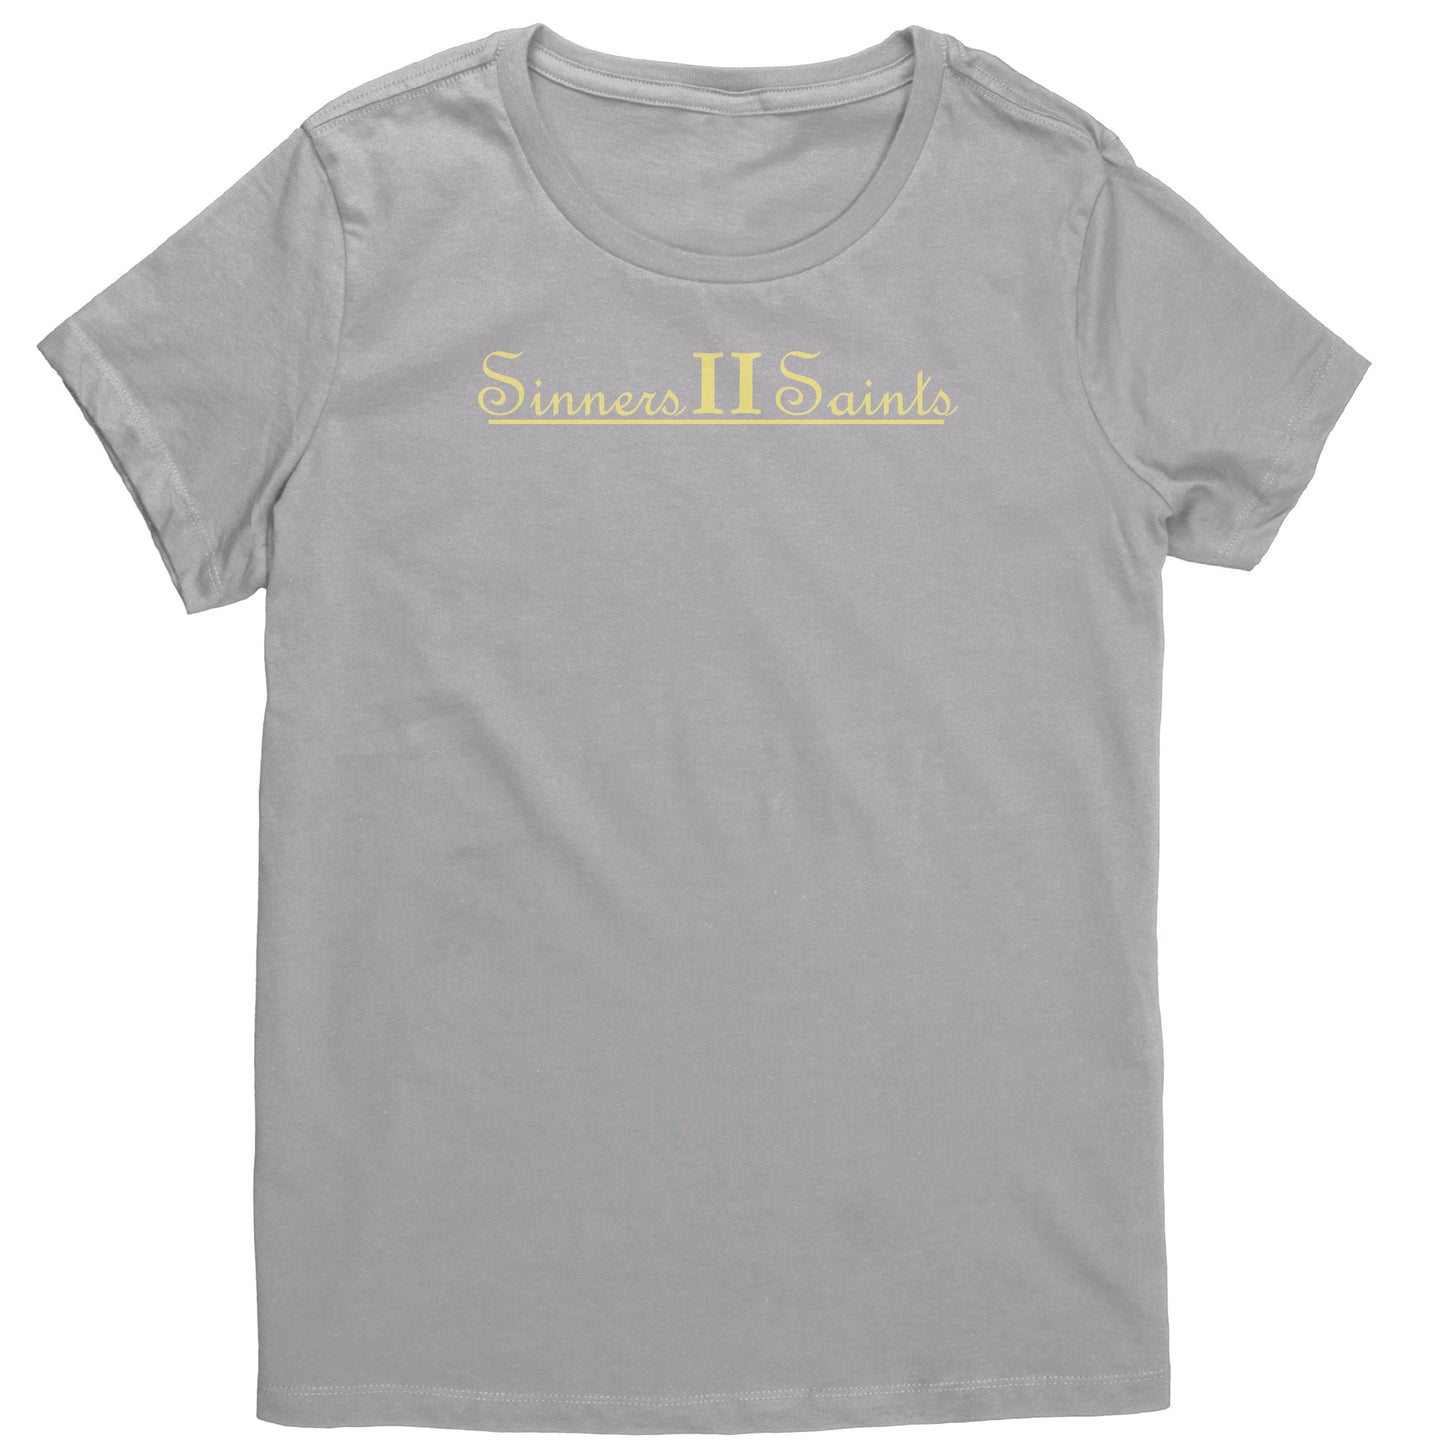 Sinners II Saints Women's T-Shirt